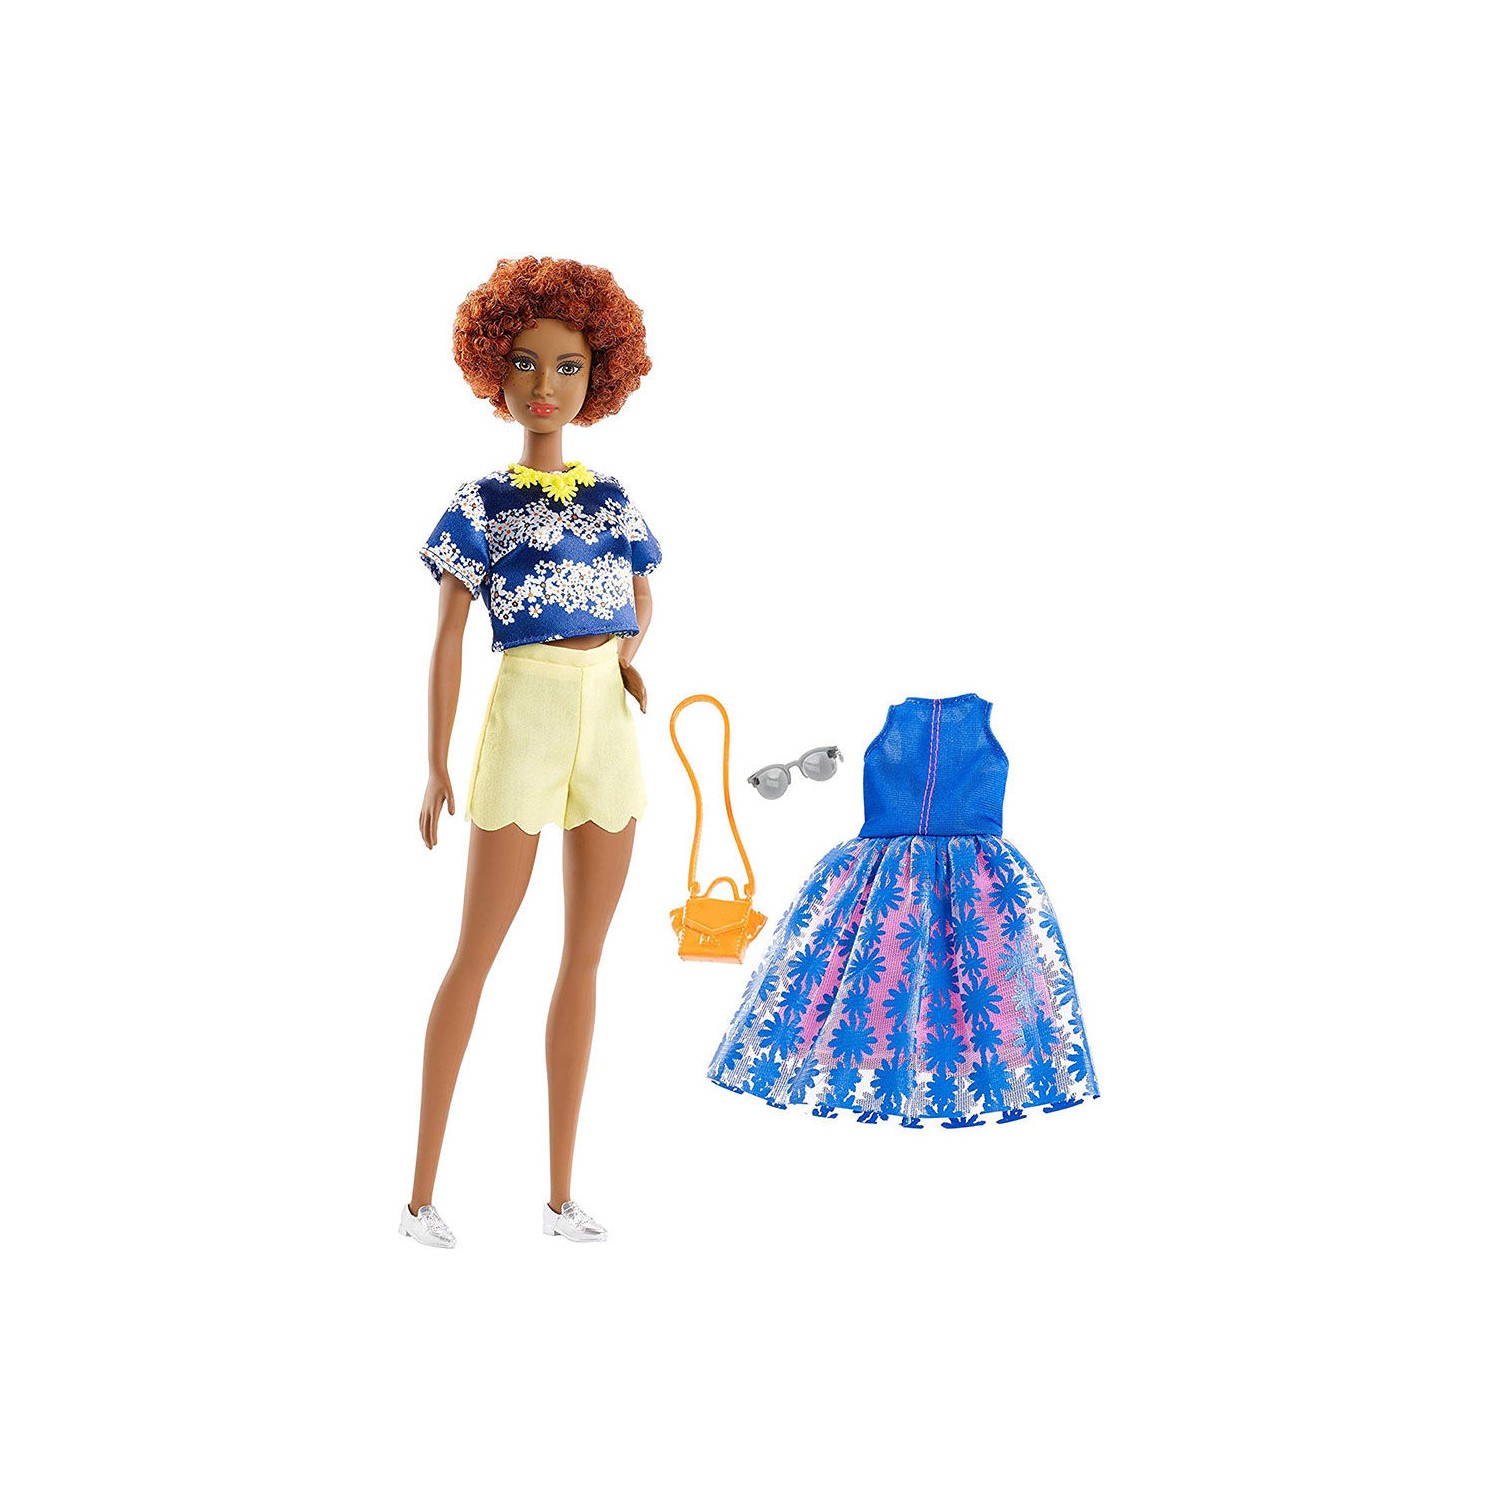 Кукла Barbie Fashionista Baby & Outfits FJF67 FRY80 barbie 72х41 см